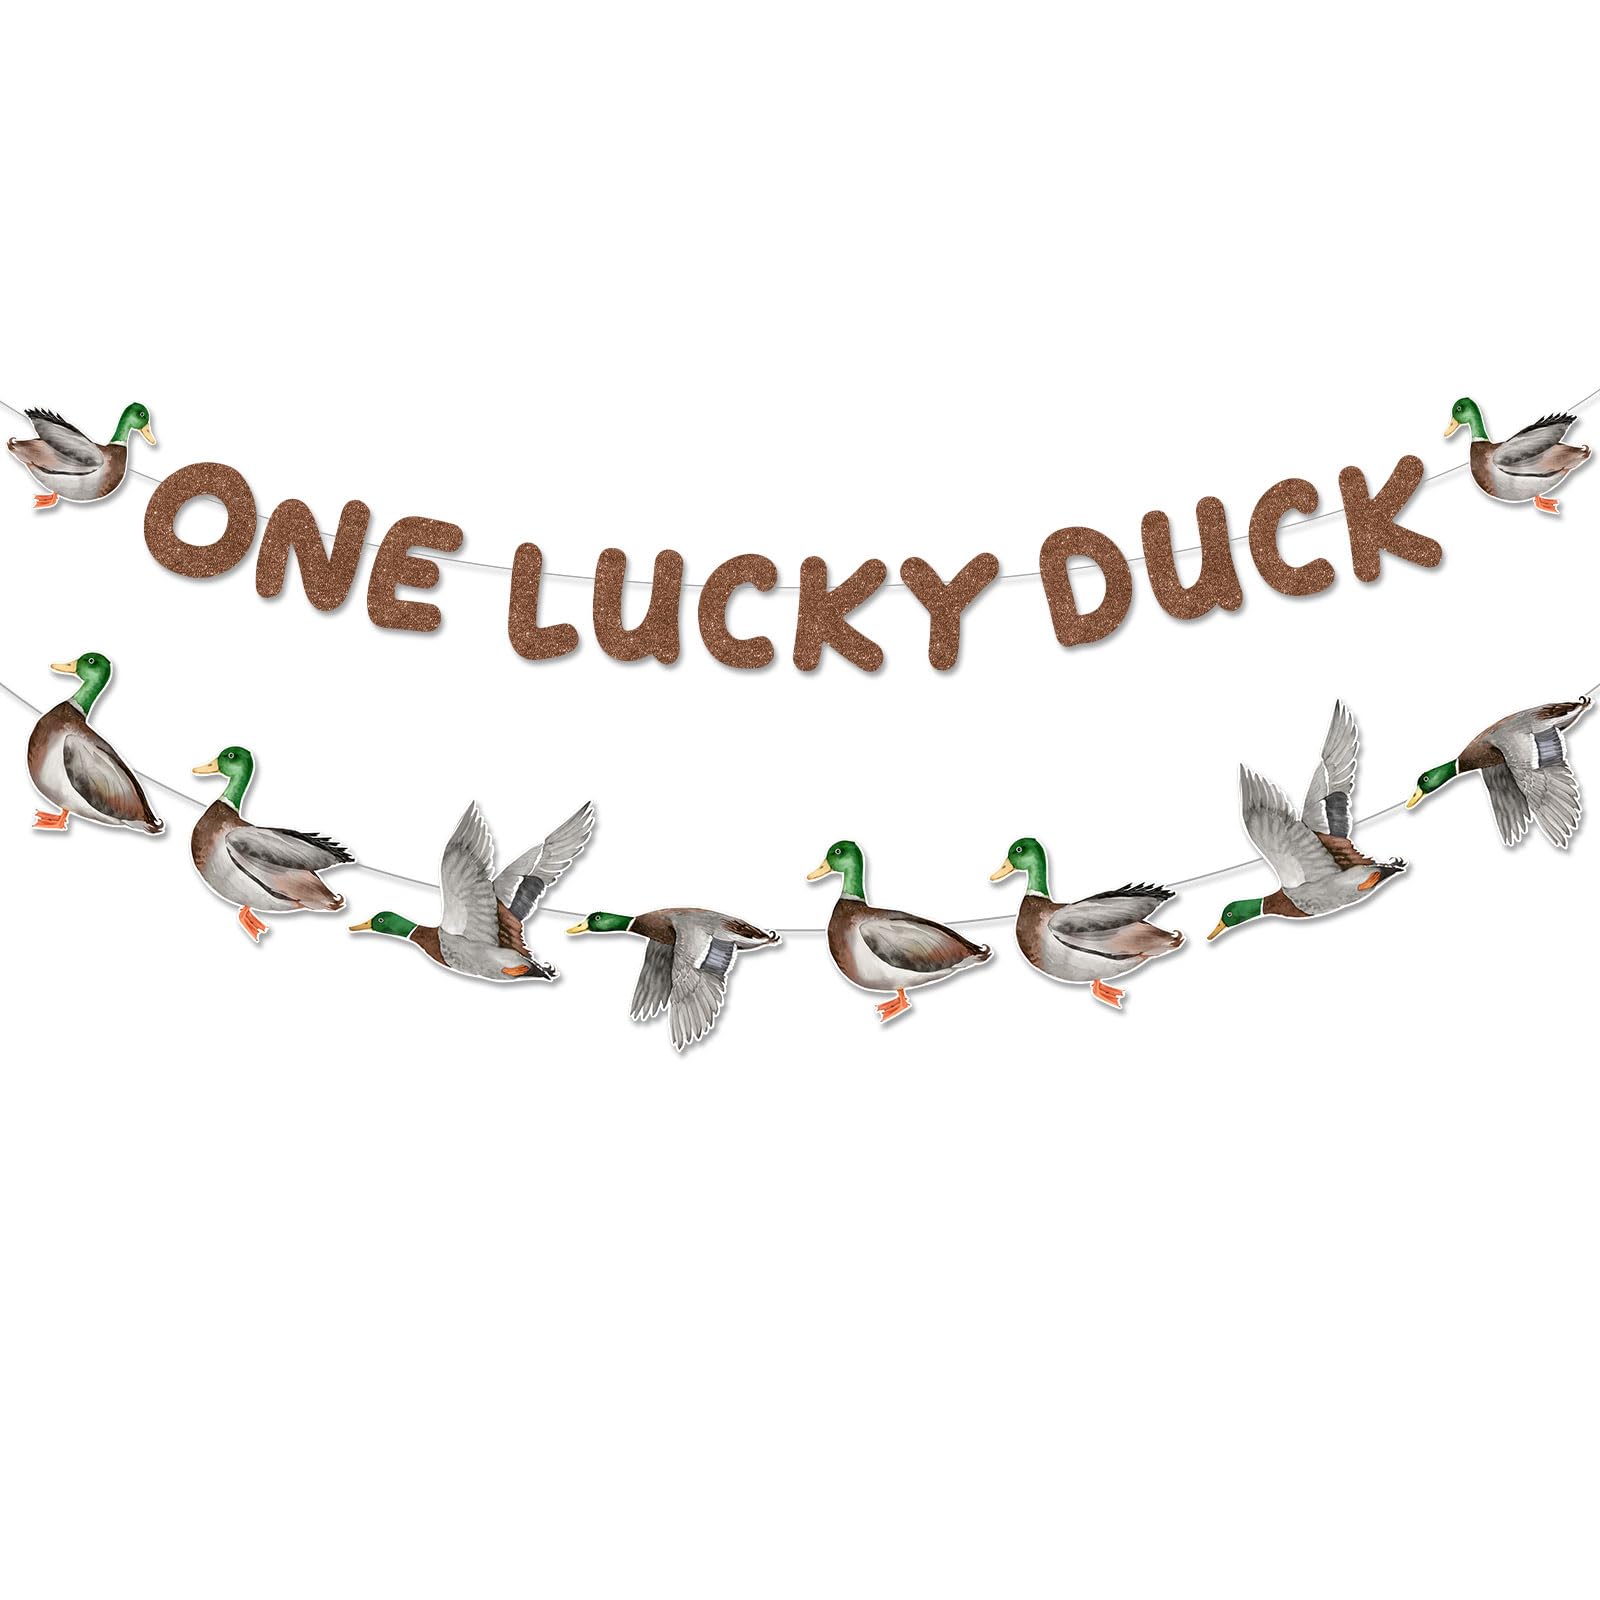 Sursurprise Duck Hunting First Birthday Decorations, One Lucky Duck Banner Mallard Duck Garland for Boys 1st Birthday Party Supplies